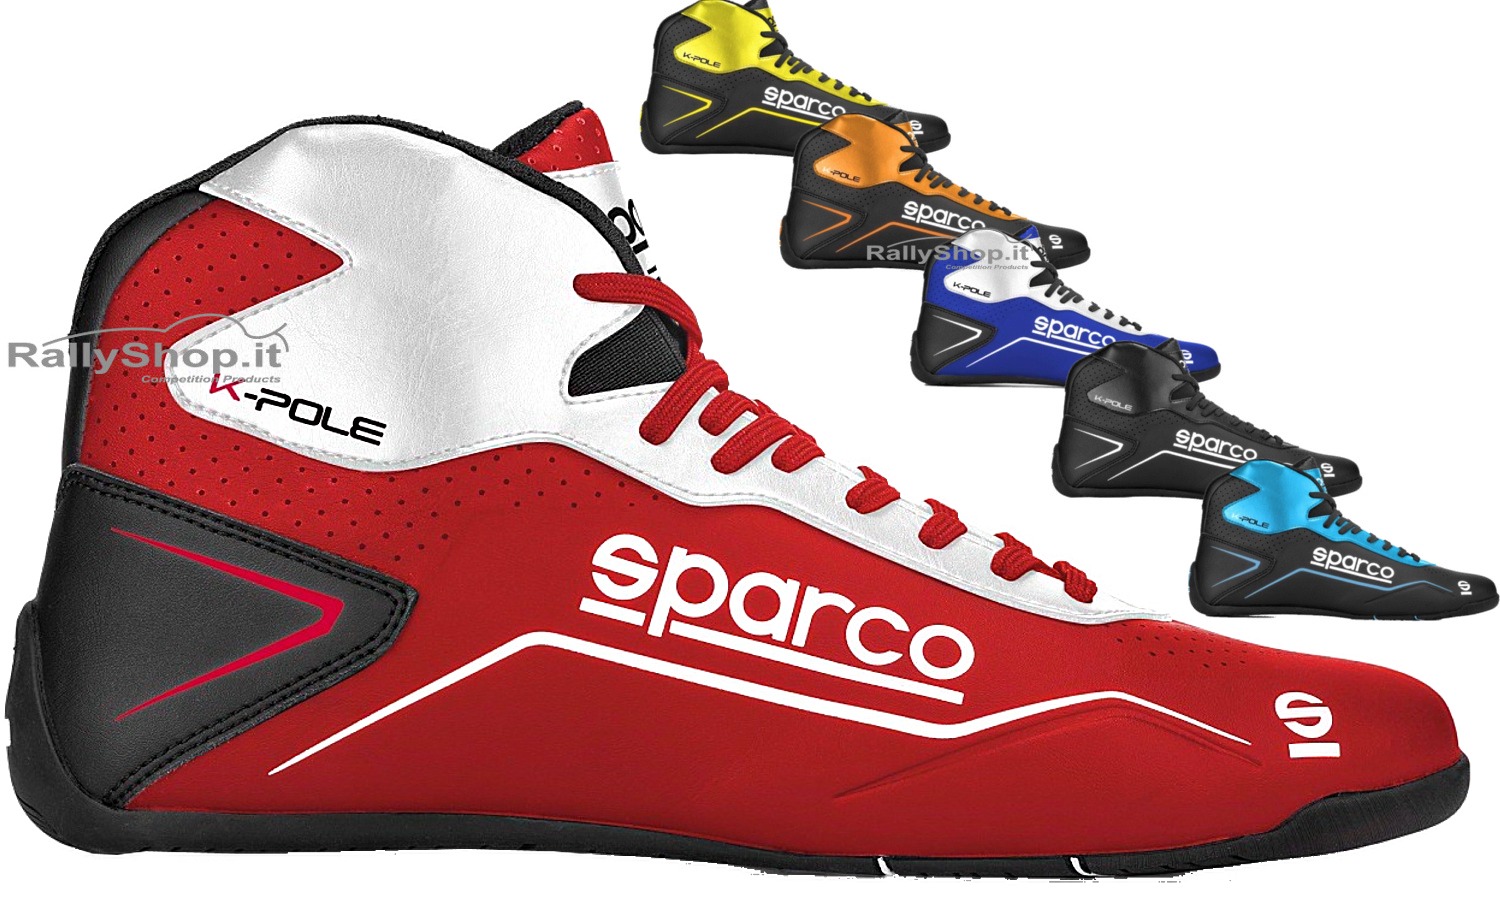 Scarpe Sparco K-POLE - 001269 - RallyShop Italia